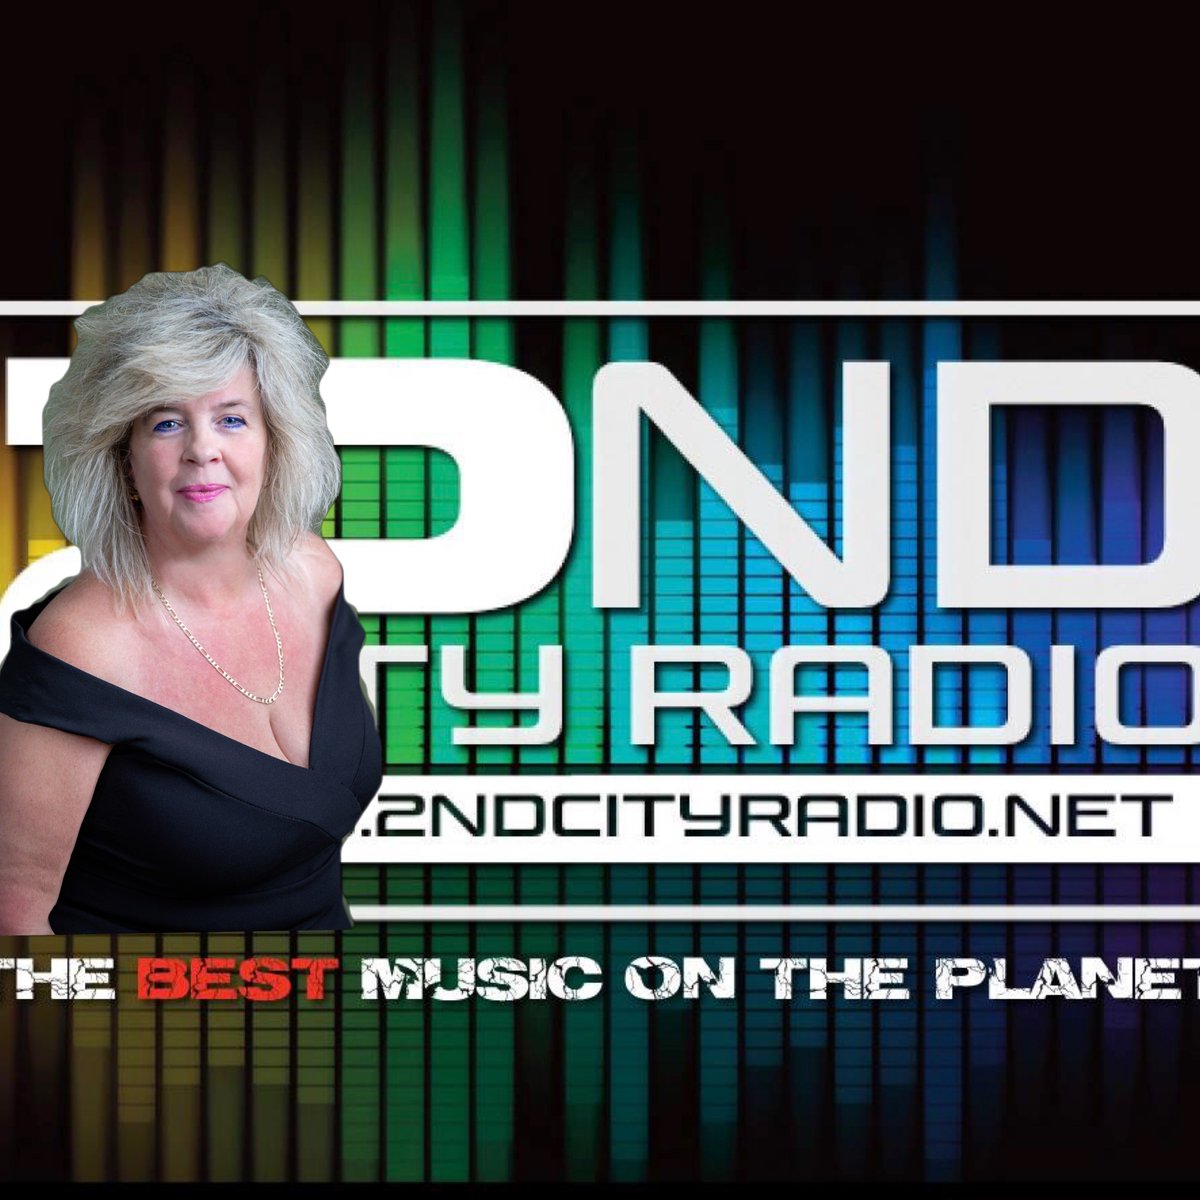 Live with Mandy P on 2ndcityradio.net @thefreds @djdurrant @mandyeap @theatreluvvie @holisticentre1 @kittiekat09 @secondcityradio